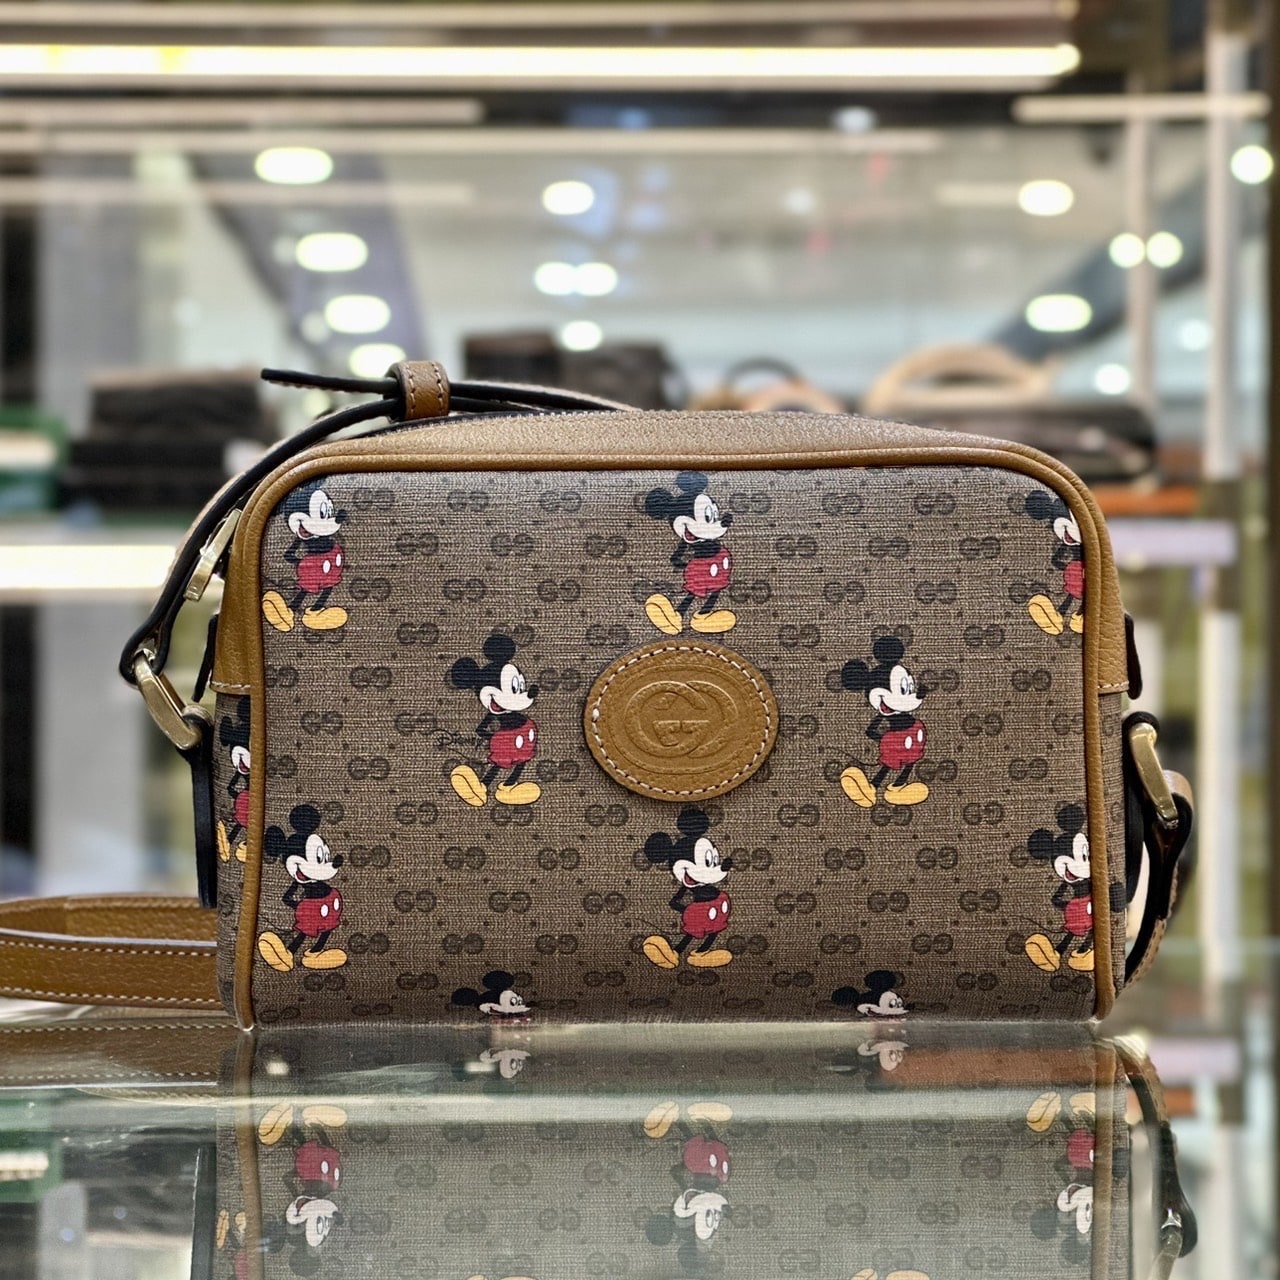 GUCCI x DISNEY Mickey Mouse Crossbody Bag - Madame N Luxury